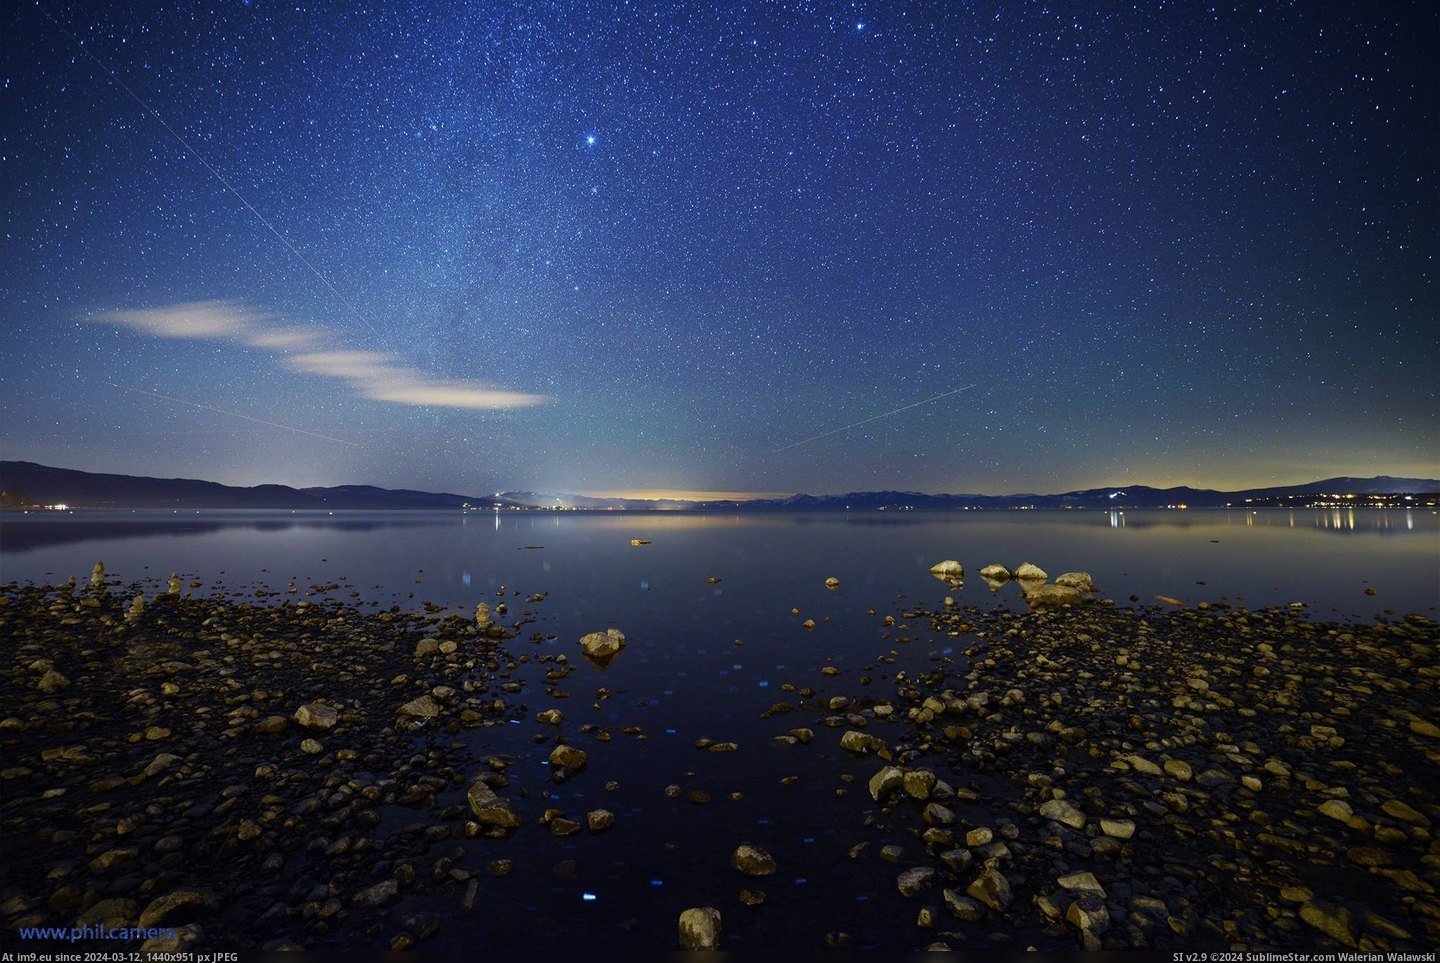 #Night #Lake #North #Interesting #Shore #Waters #Breath #Perfectly #Rocks #Stars #Tahoe [Earthporn] Breath-taking stars, perfectly still waters, and interesting rocks on the North Shore of Lake Tahoe last night [oc b Pic. (Bild von album My r/EARTHPORN favs))